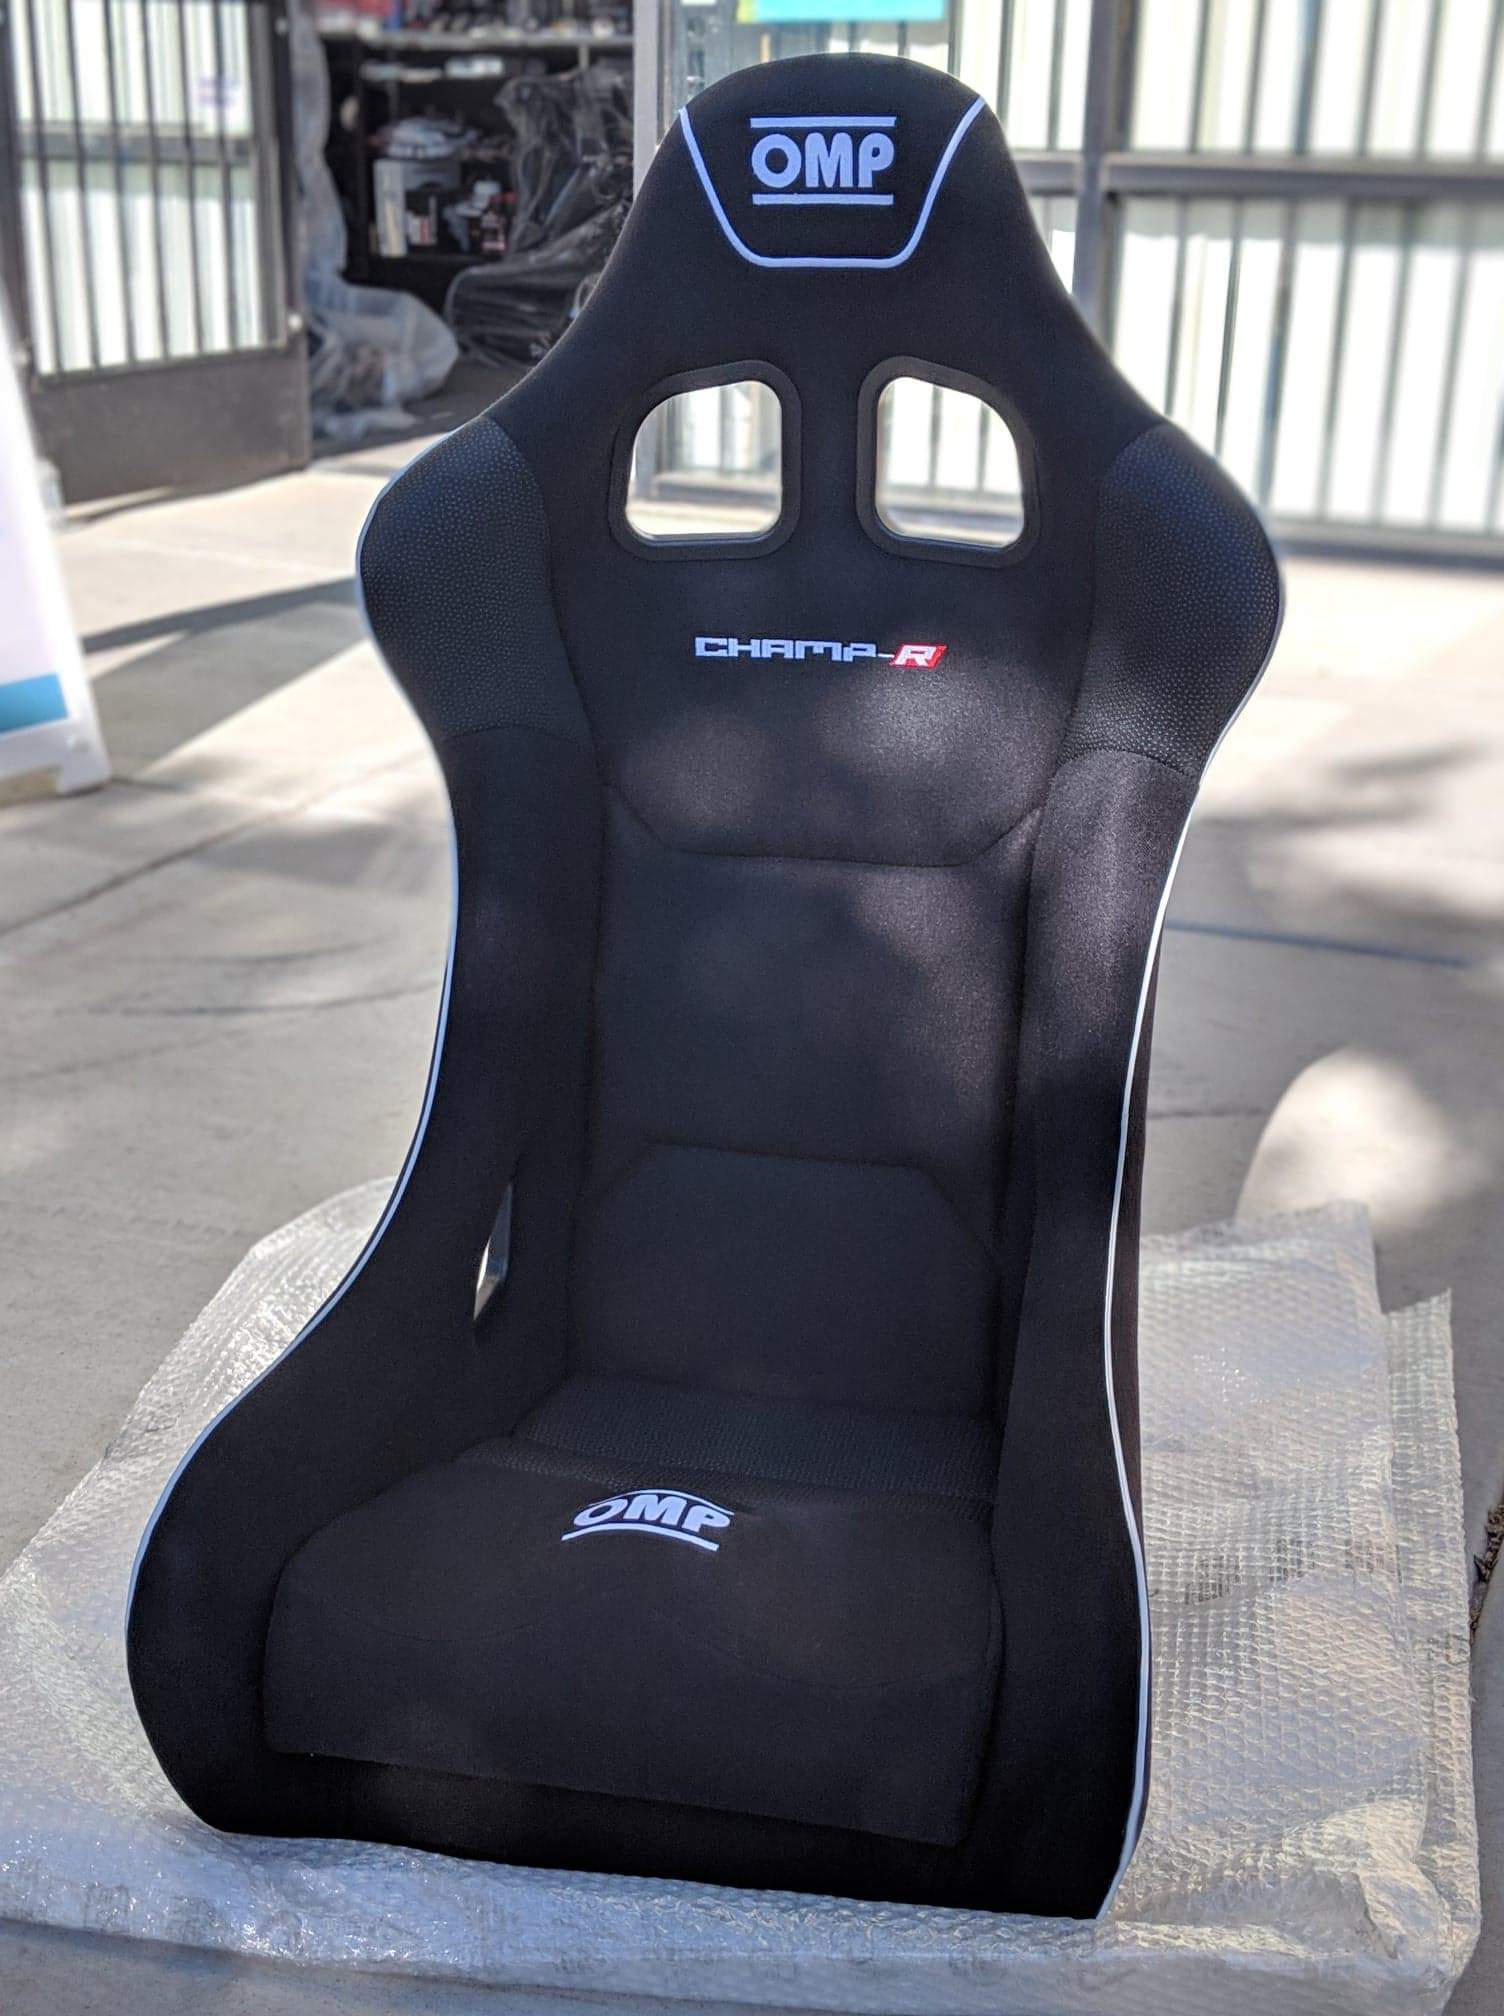 RS-PT2 - Racing seat